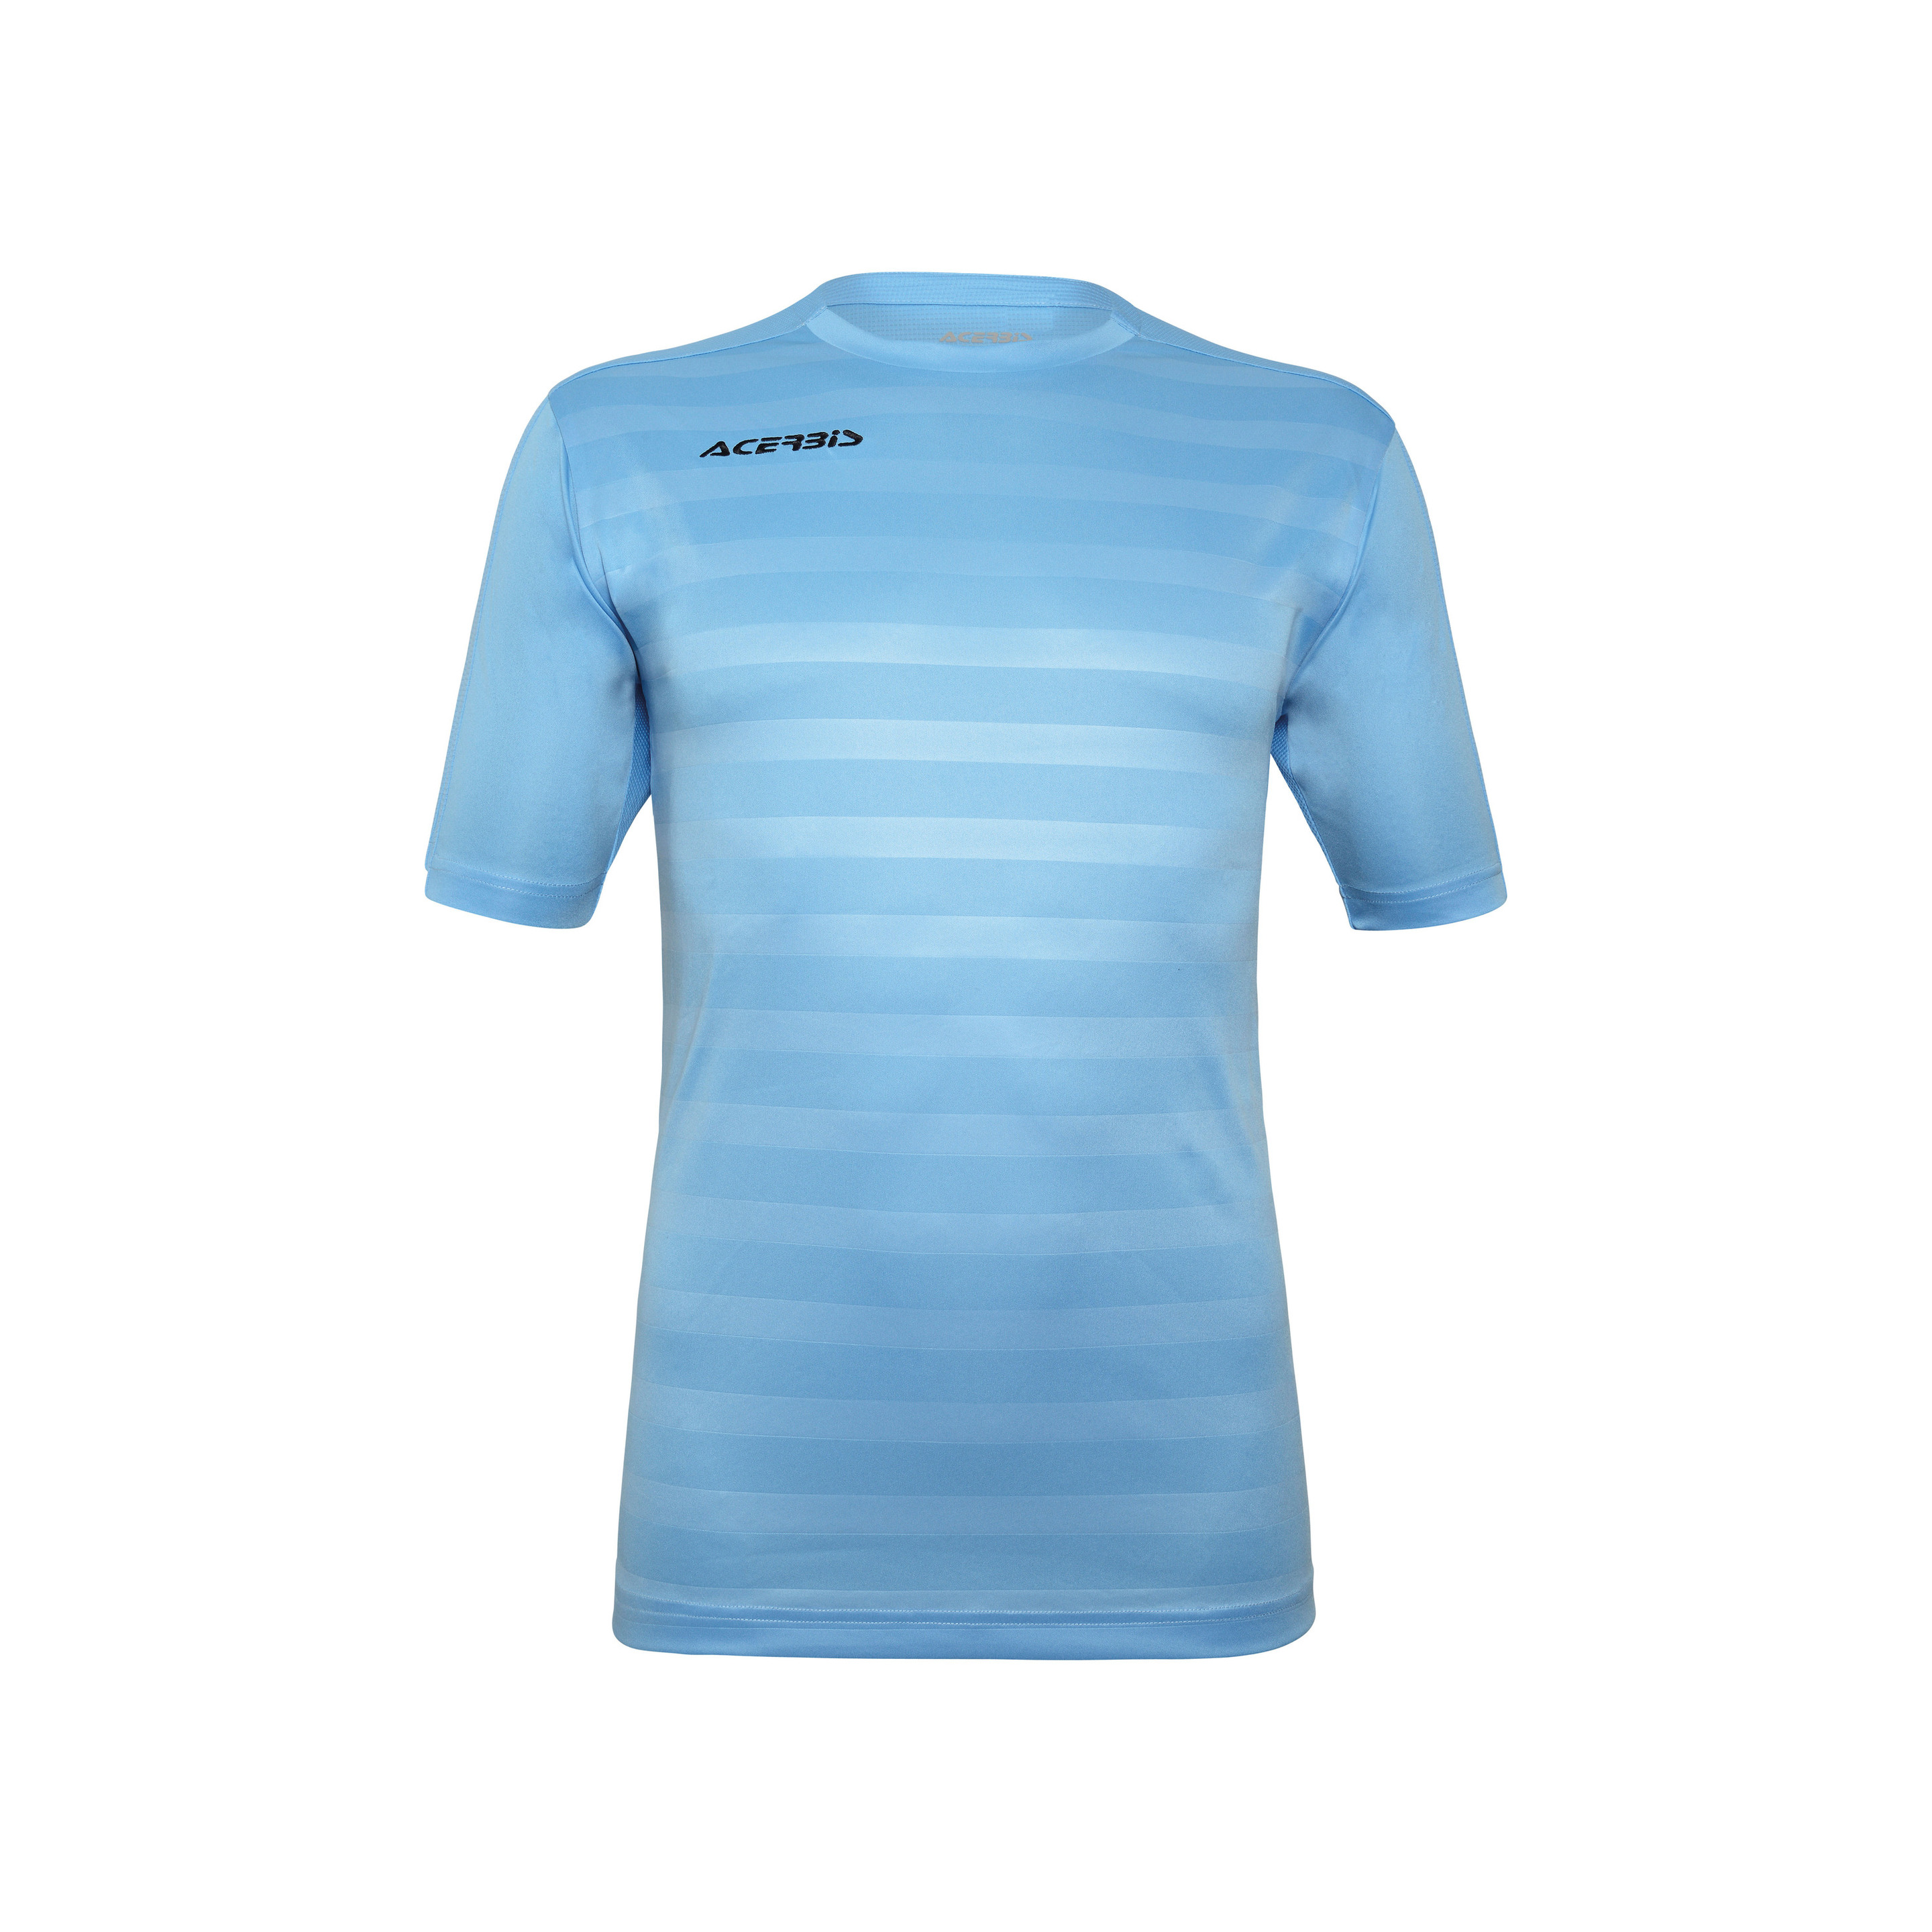 Camiseta Manga Corta Acerbis Atlantis2 - Azul Claro - Camiseta Deportiva  MKP